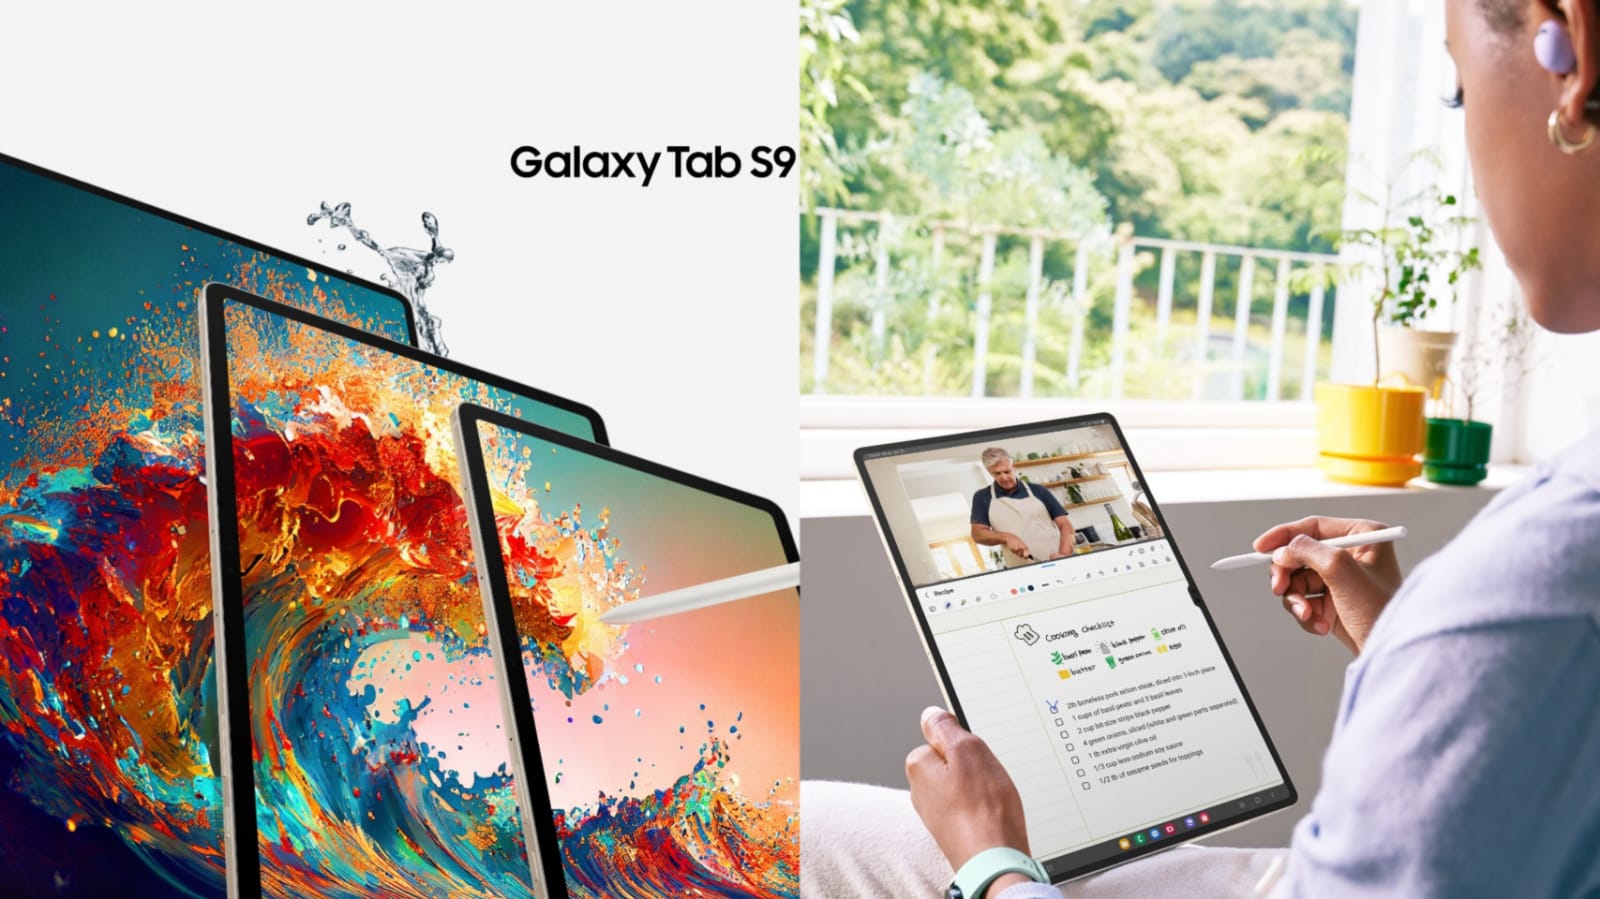 Samsung Galaxy Tab S9, Hadirkan Pengalaman Premium Galaxy Terbaru ke dalam Sebuah Tablet